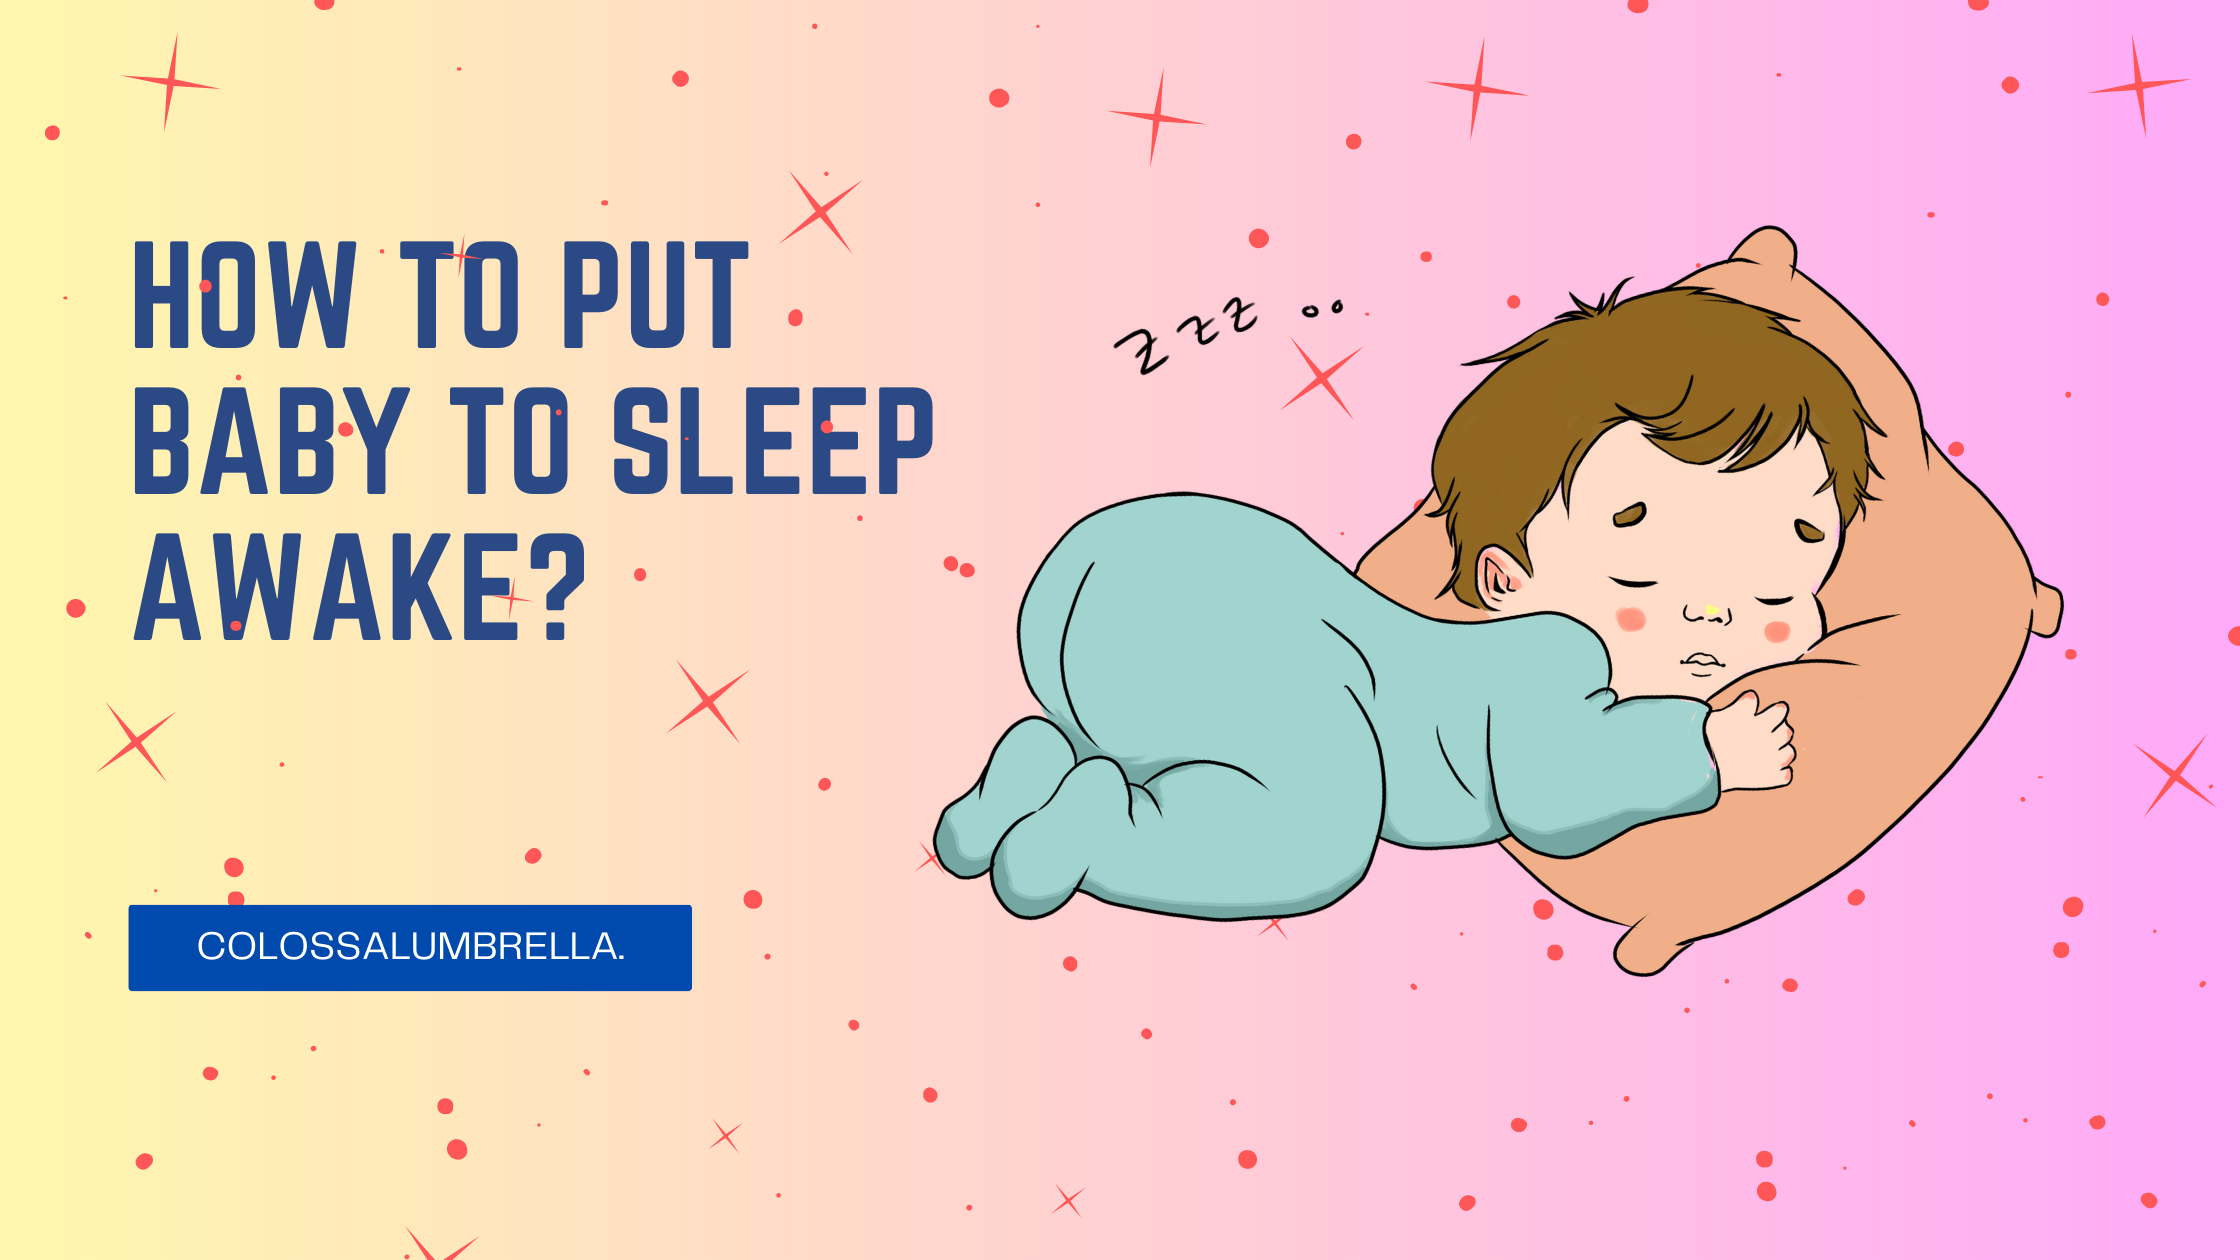 How to Put Baby to Sleep Awake by Colossalumbrella